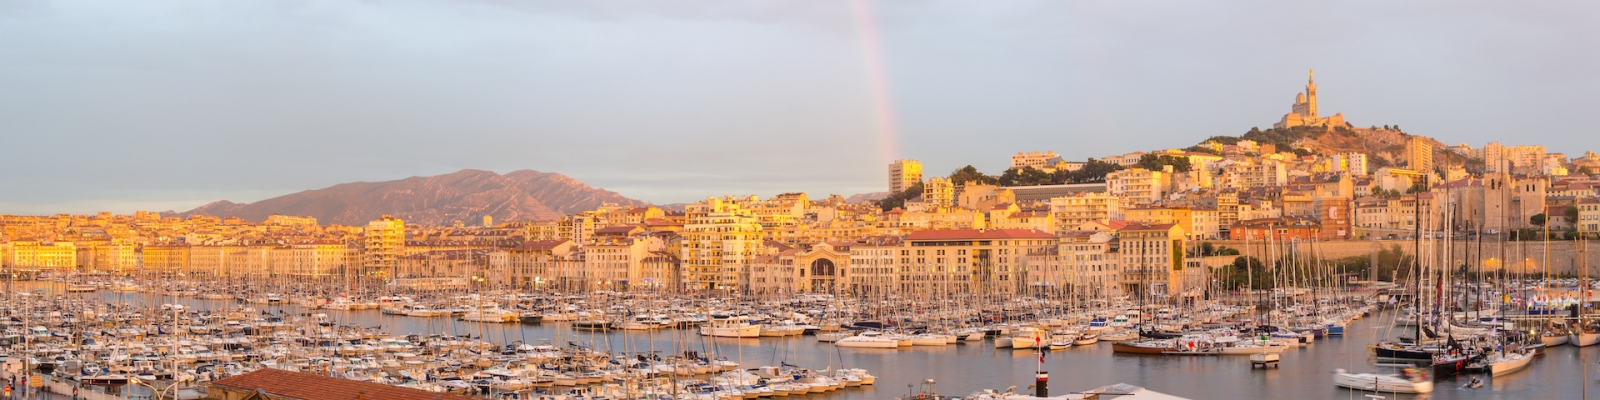 Port of Marseille - France